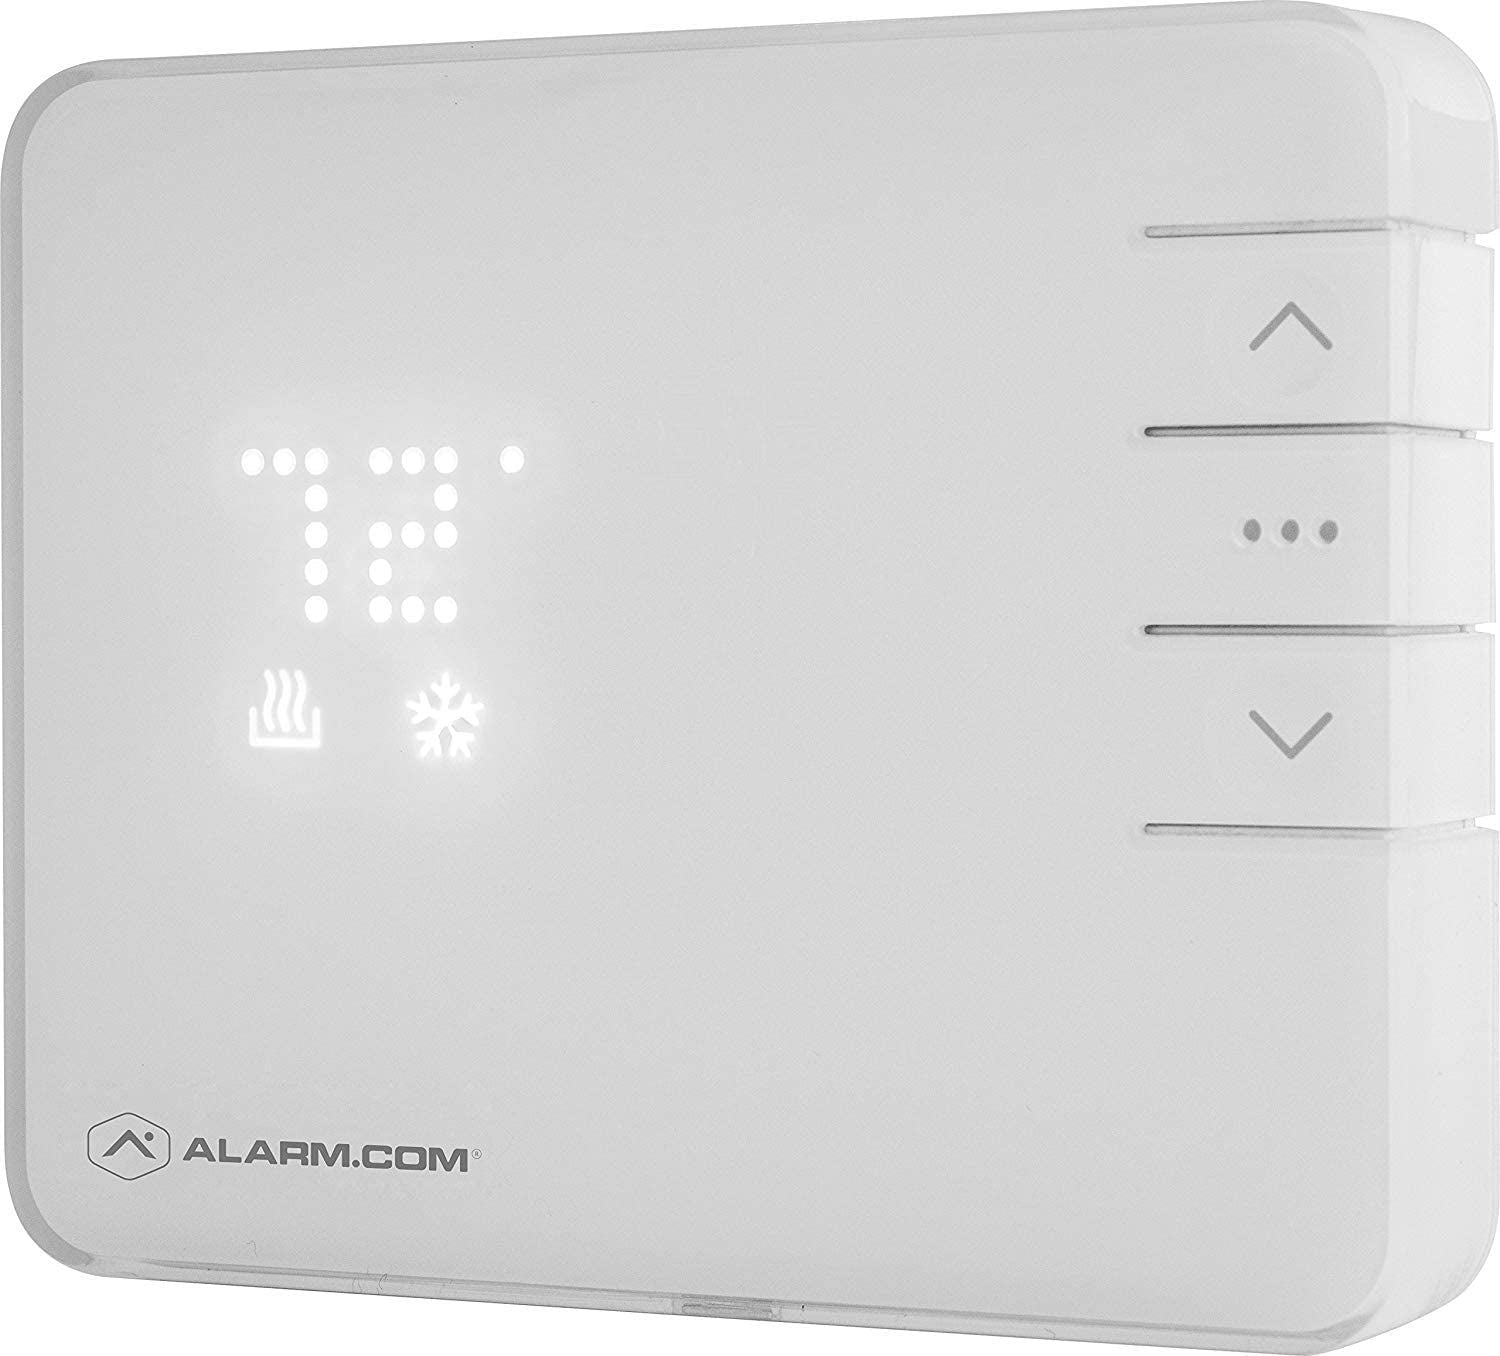 Alarm. Com Smart Thermostat